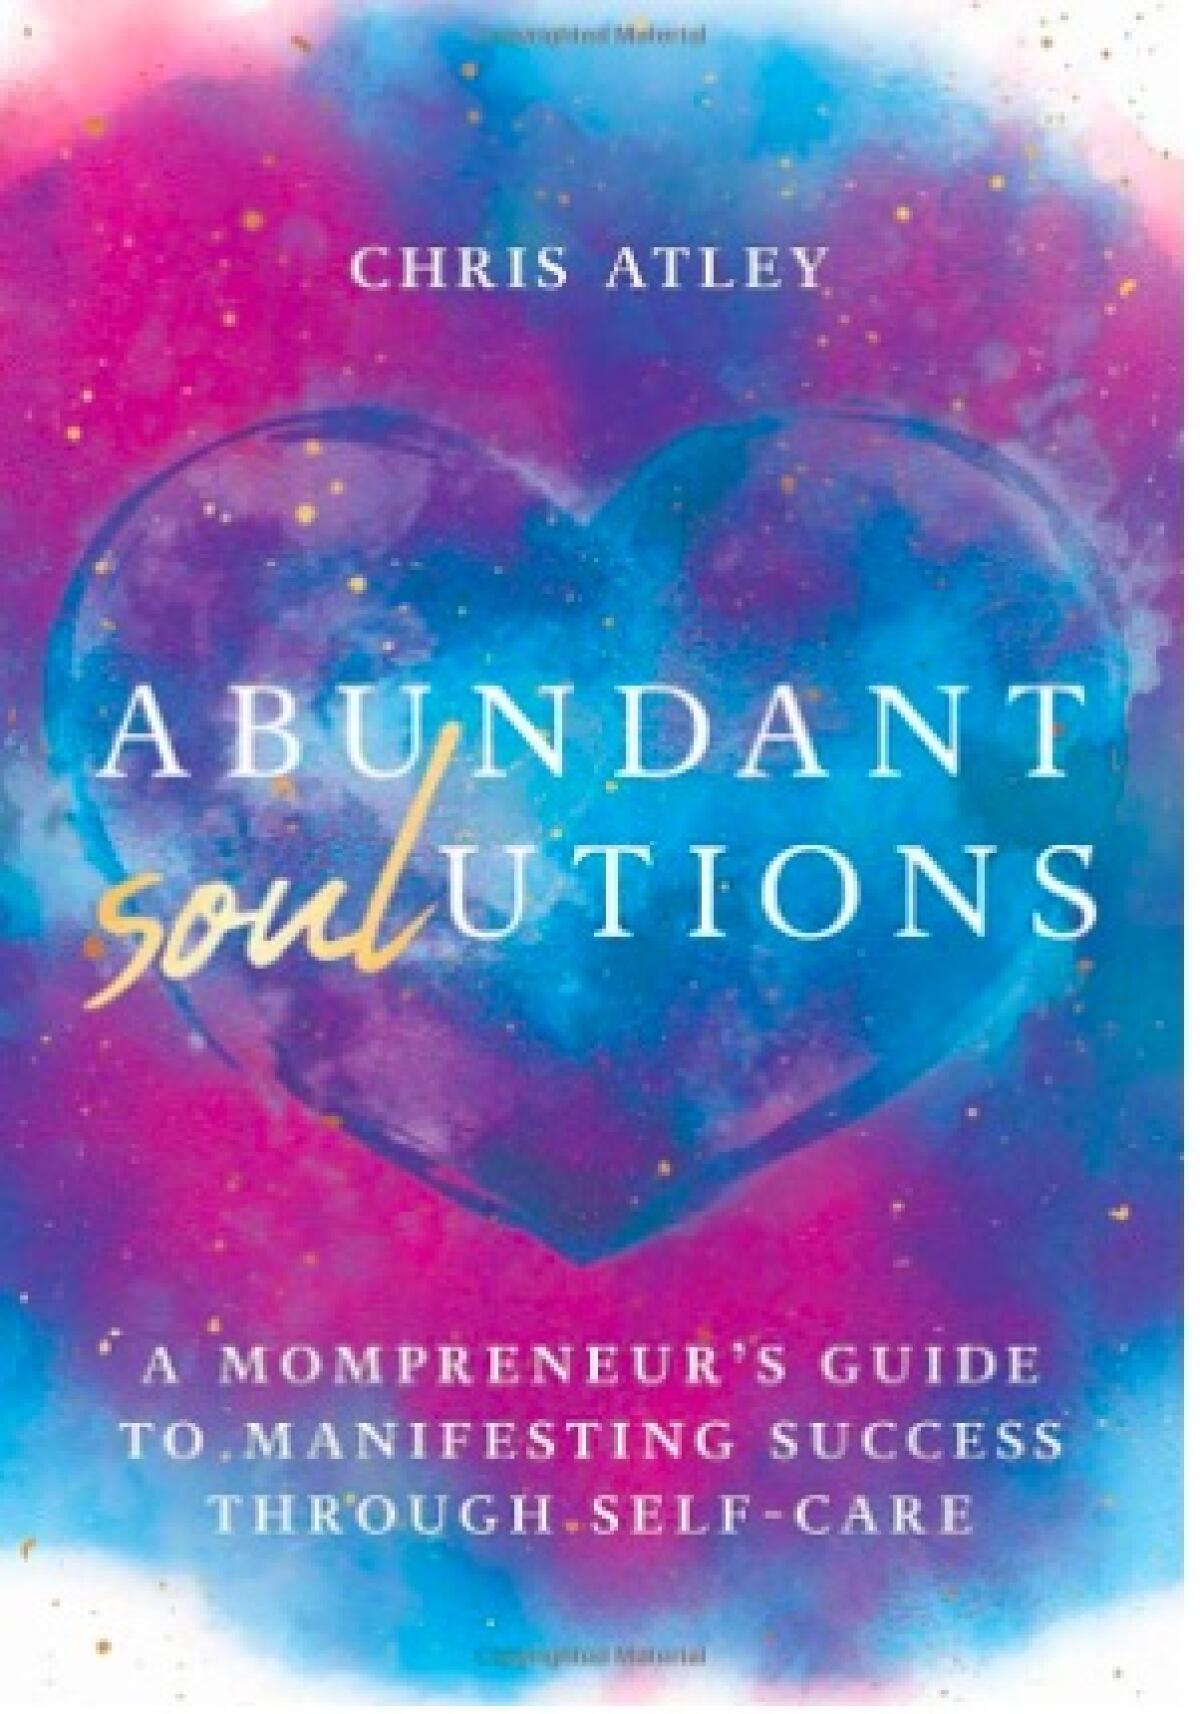 Chris Atley's new book "Abundant Soul-utions."